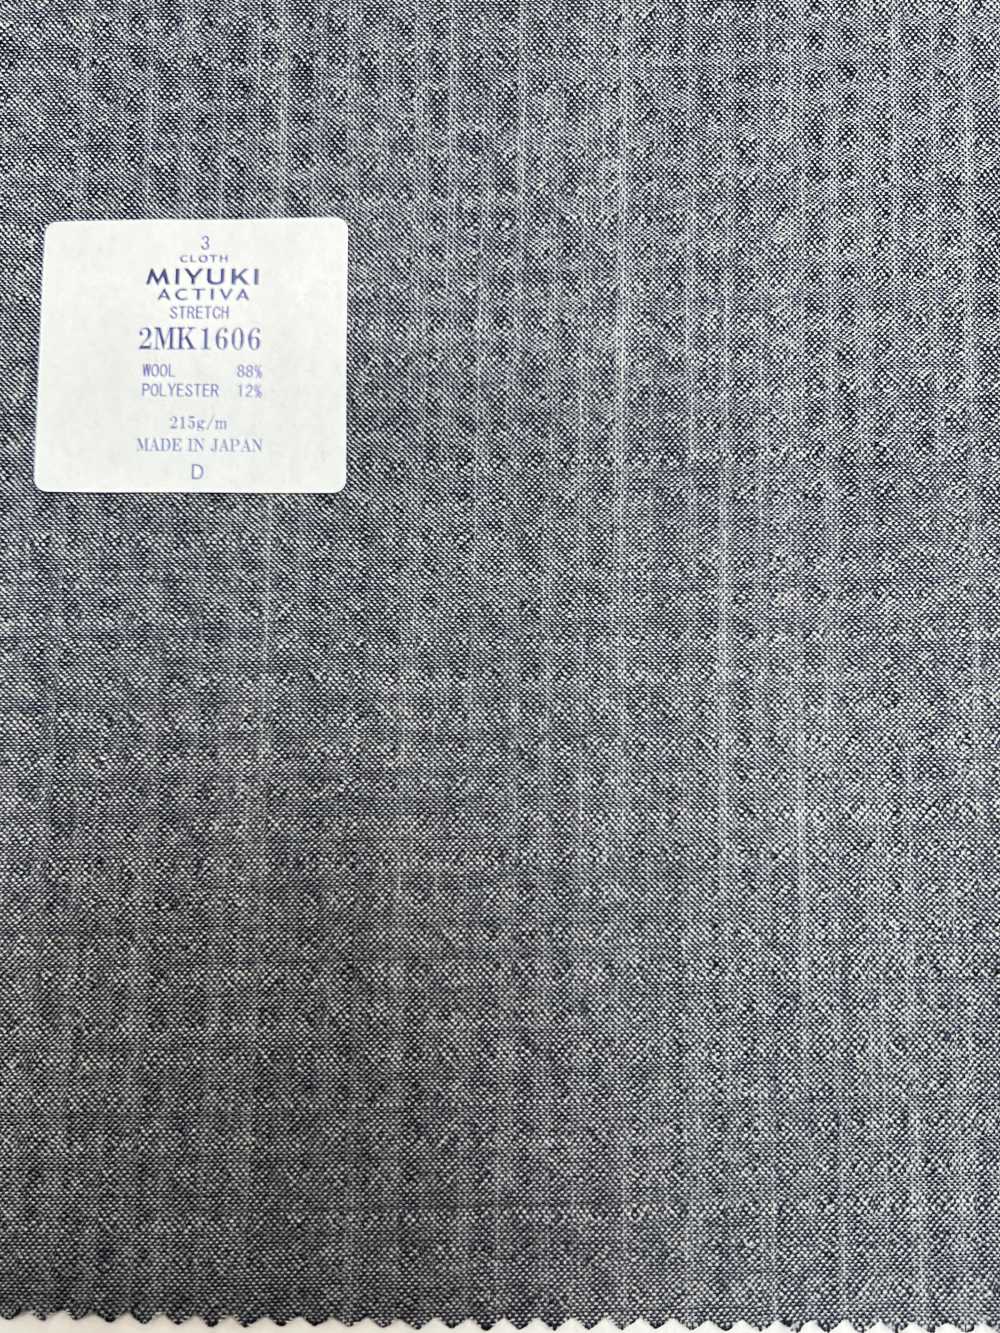 2MK1606 MIYUKI COMFORT ACTIVA STRETCH Hellblau[Textil] Miyuki-Keori (Miyuki)